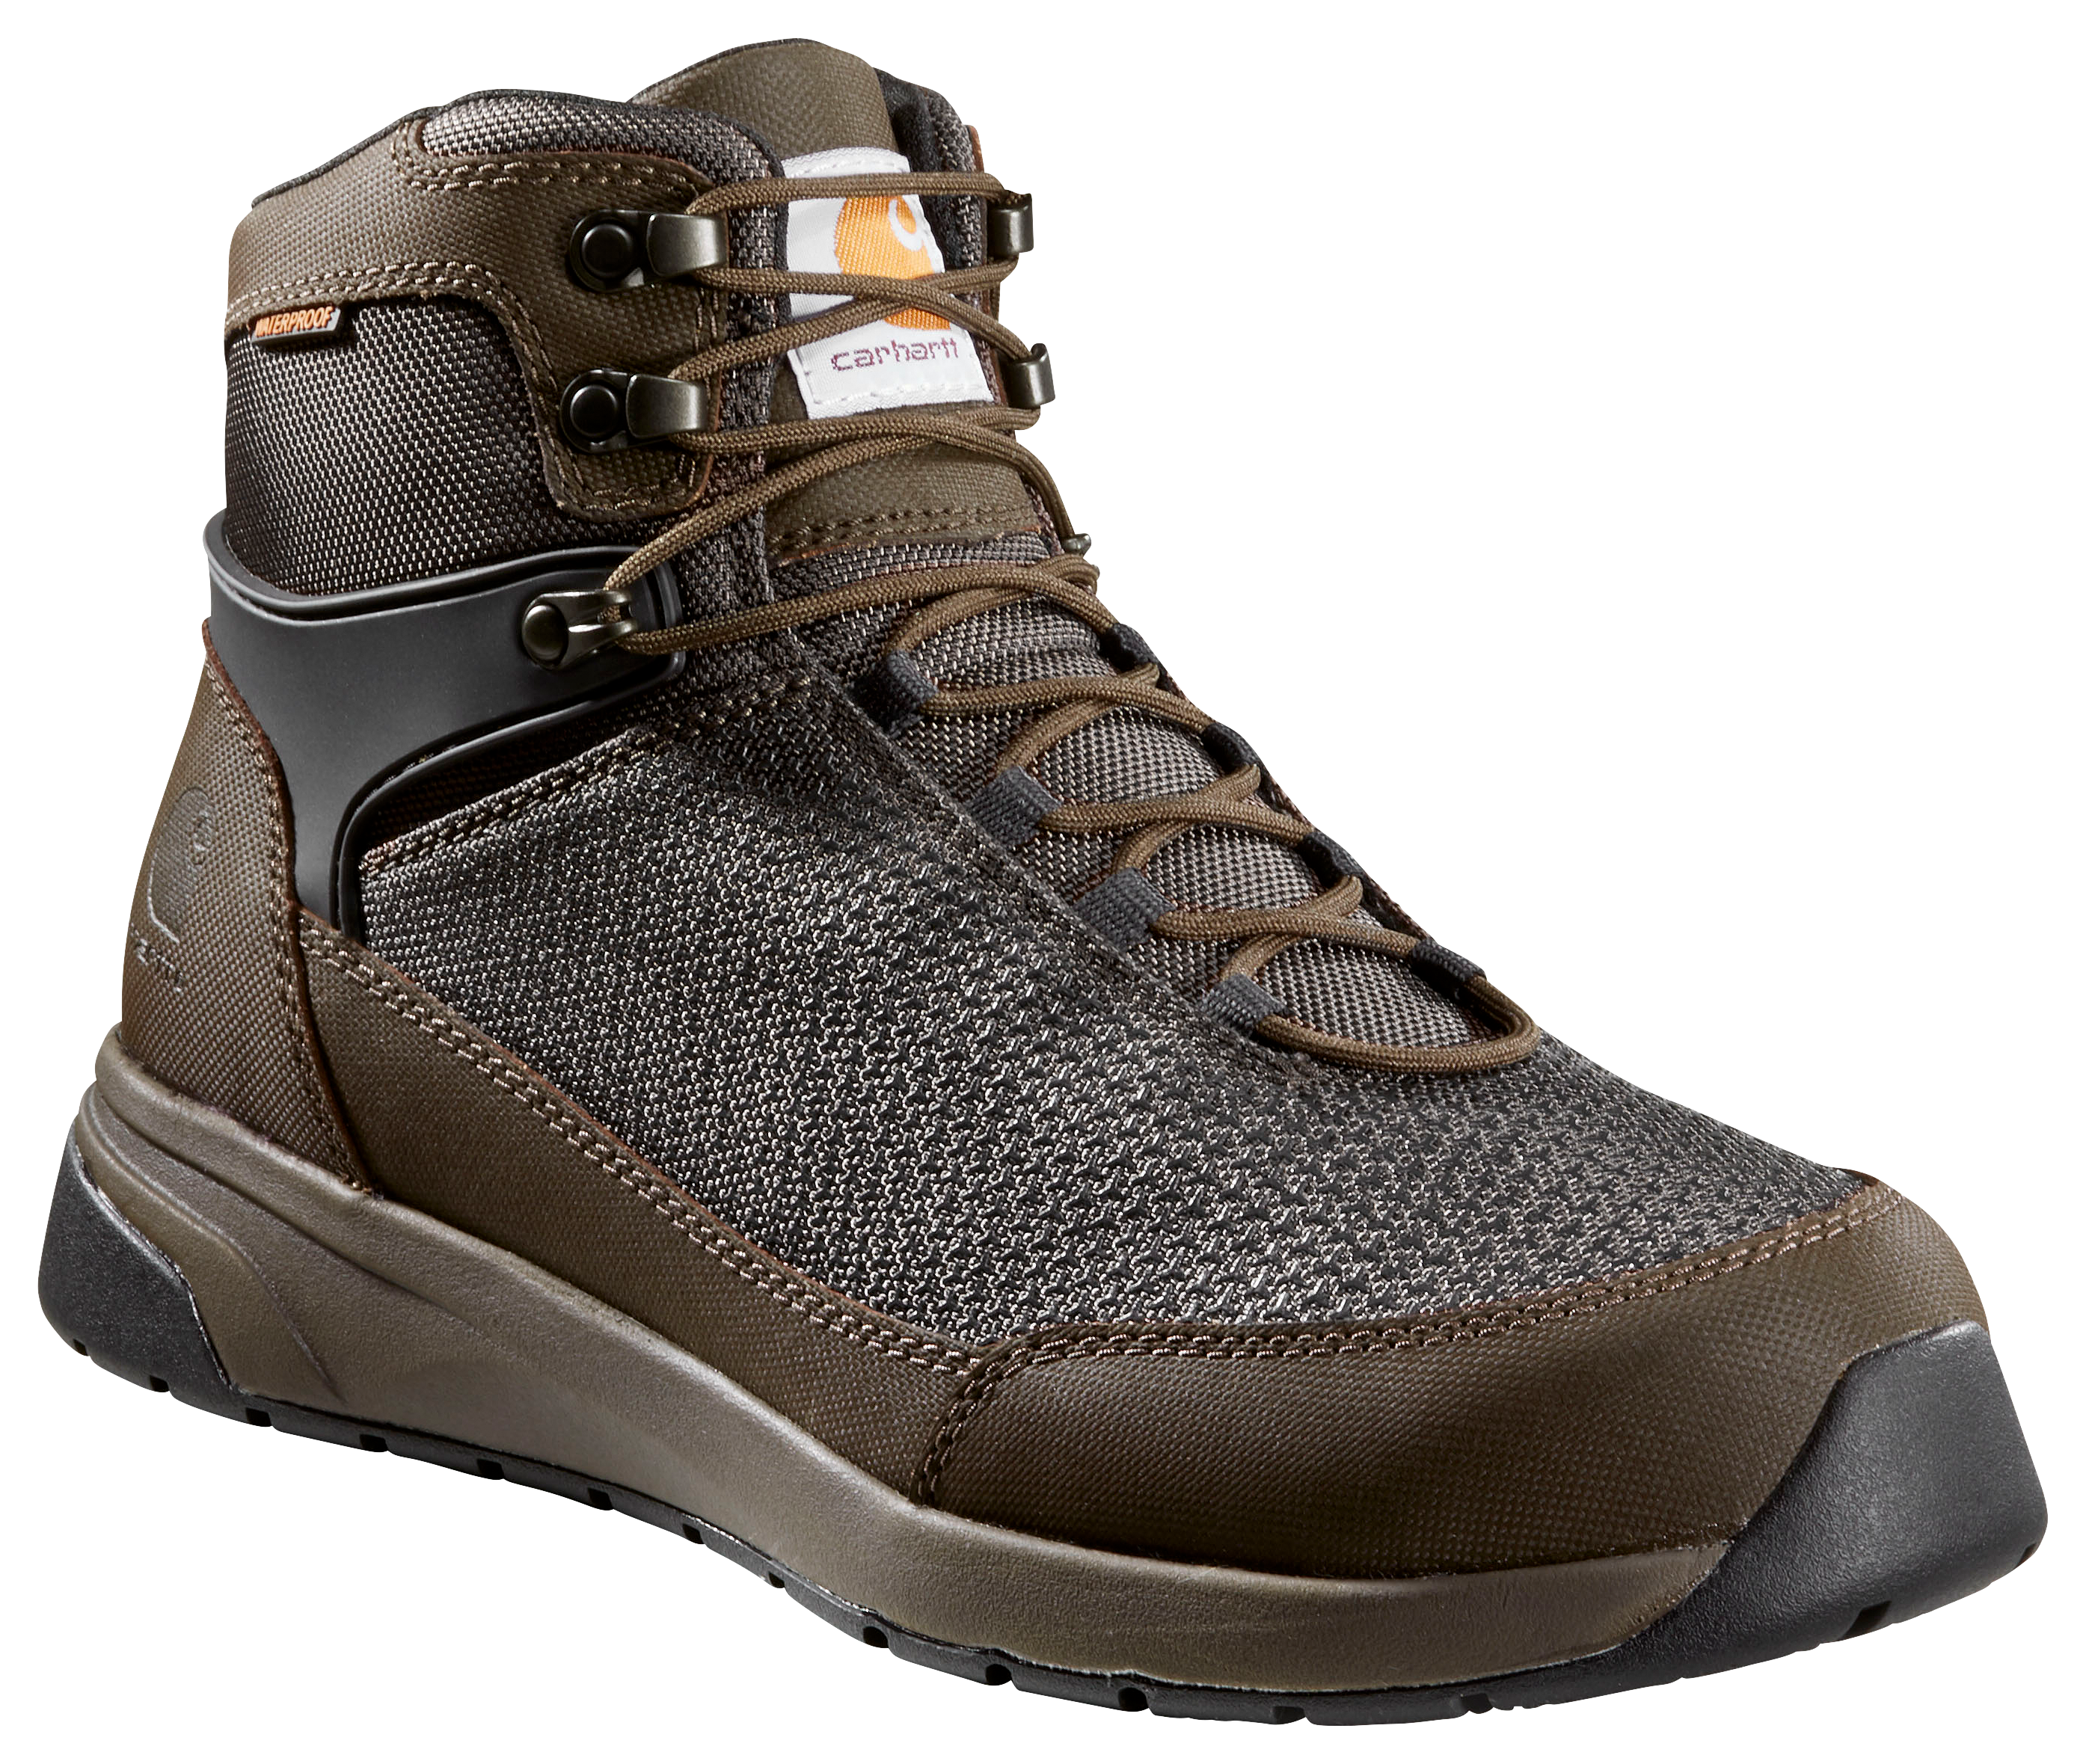 Carhartt Force 6"" Nano Composite-Toe Work Boots for Men - Espresso - 12W